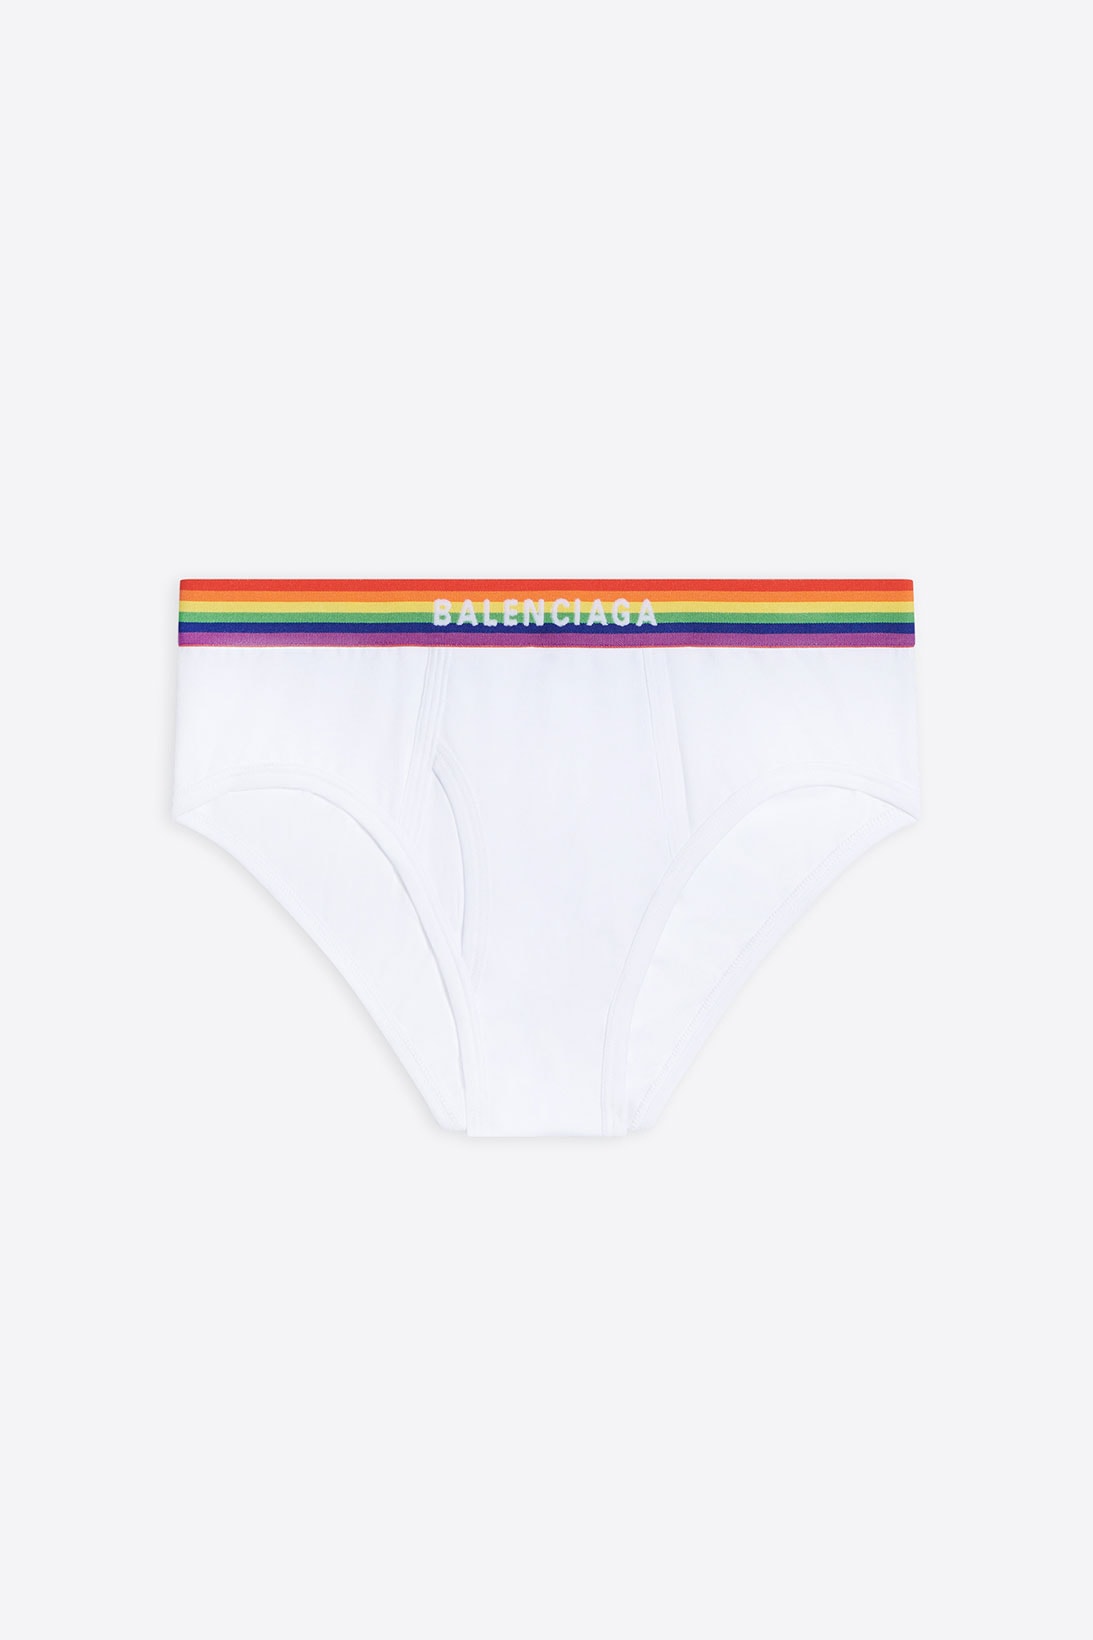 balenciaga pre-fall 2021 collection pride month capsule panties briefs